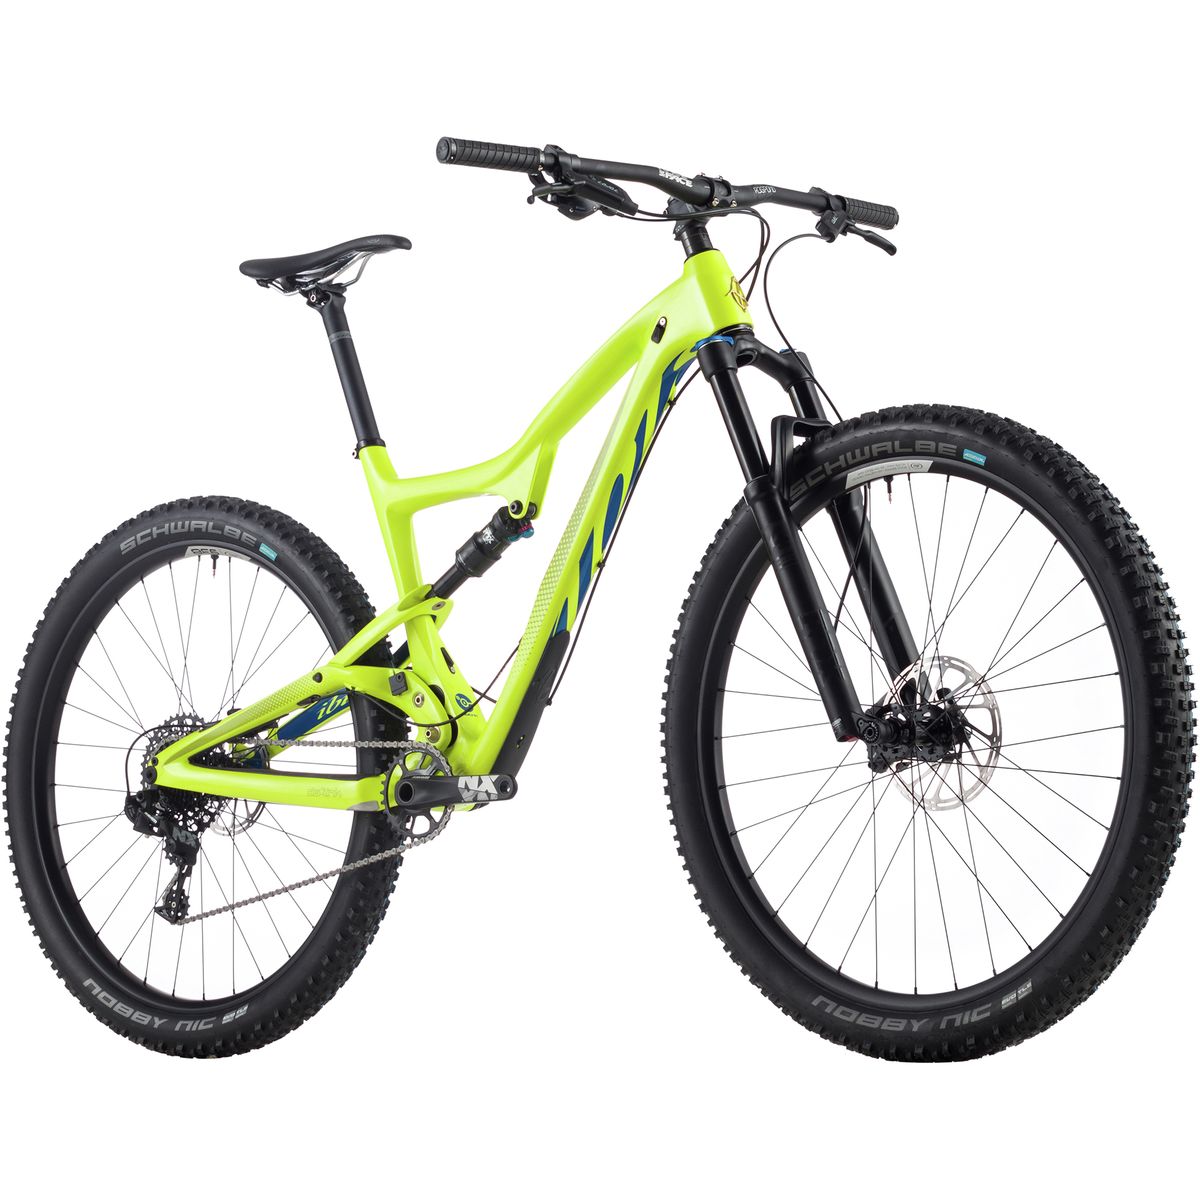 Ibis Ripley LS Carbon 3.0 NX Complete Mountain Bike 2018